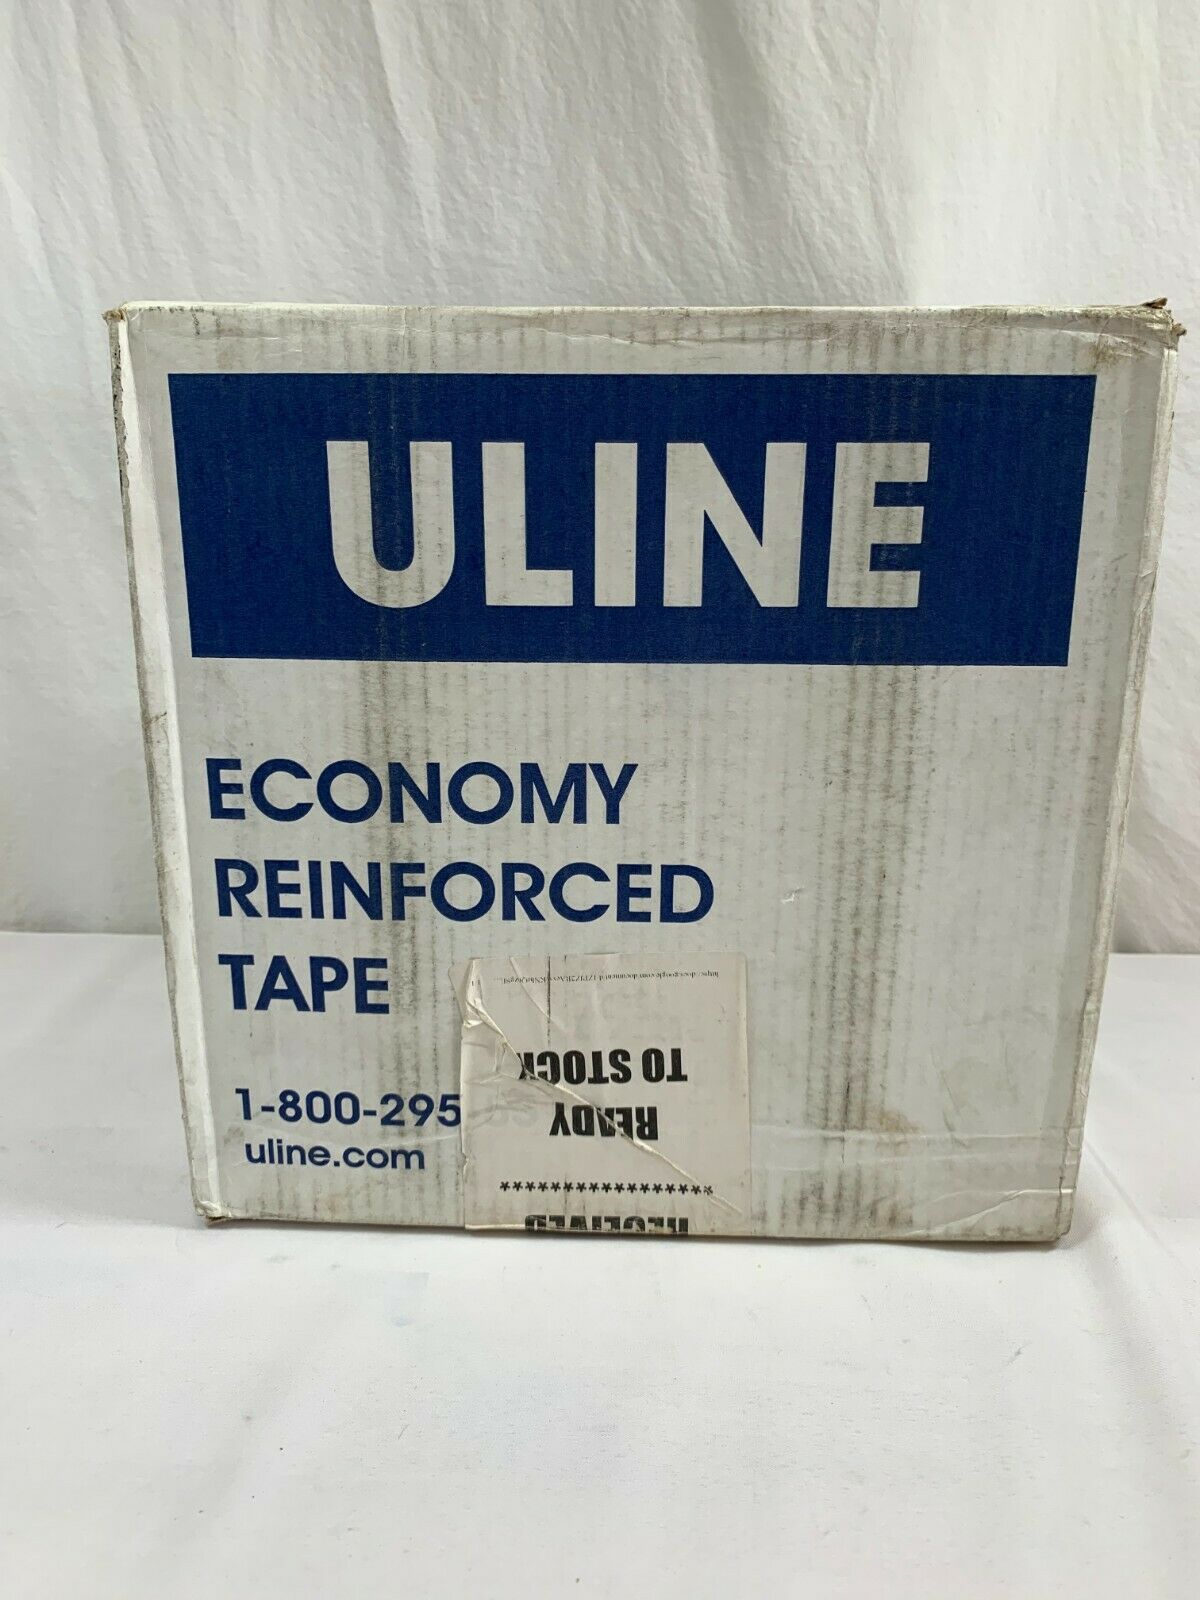 Uline Economy Reinforced 3 Inch X 375 Ft Tape - 8 Rolls - White S-2338